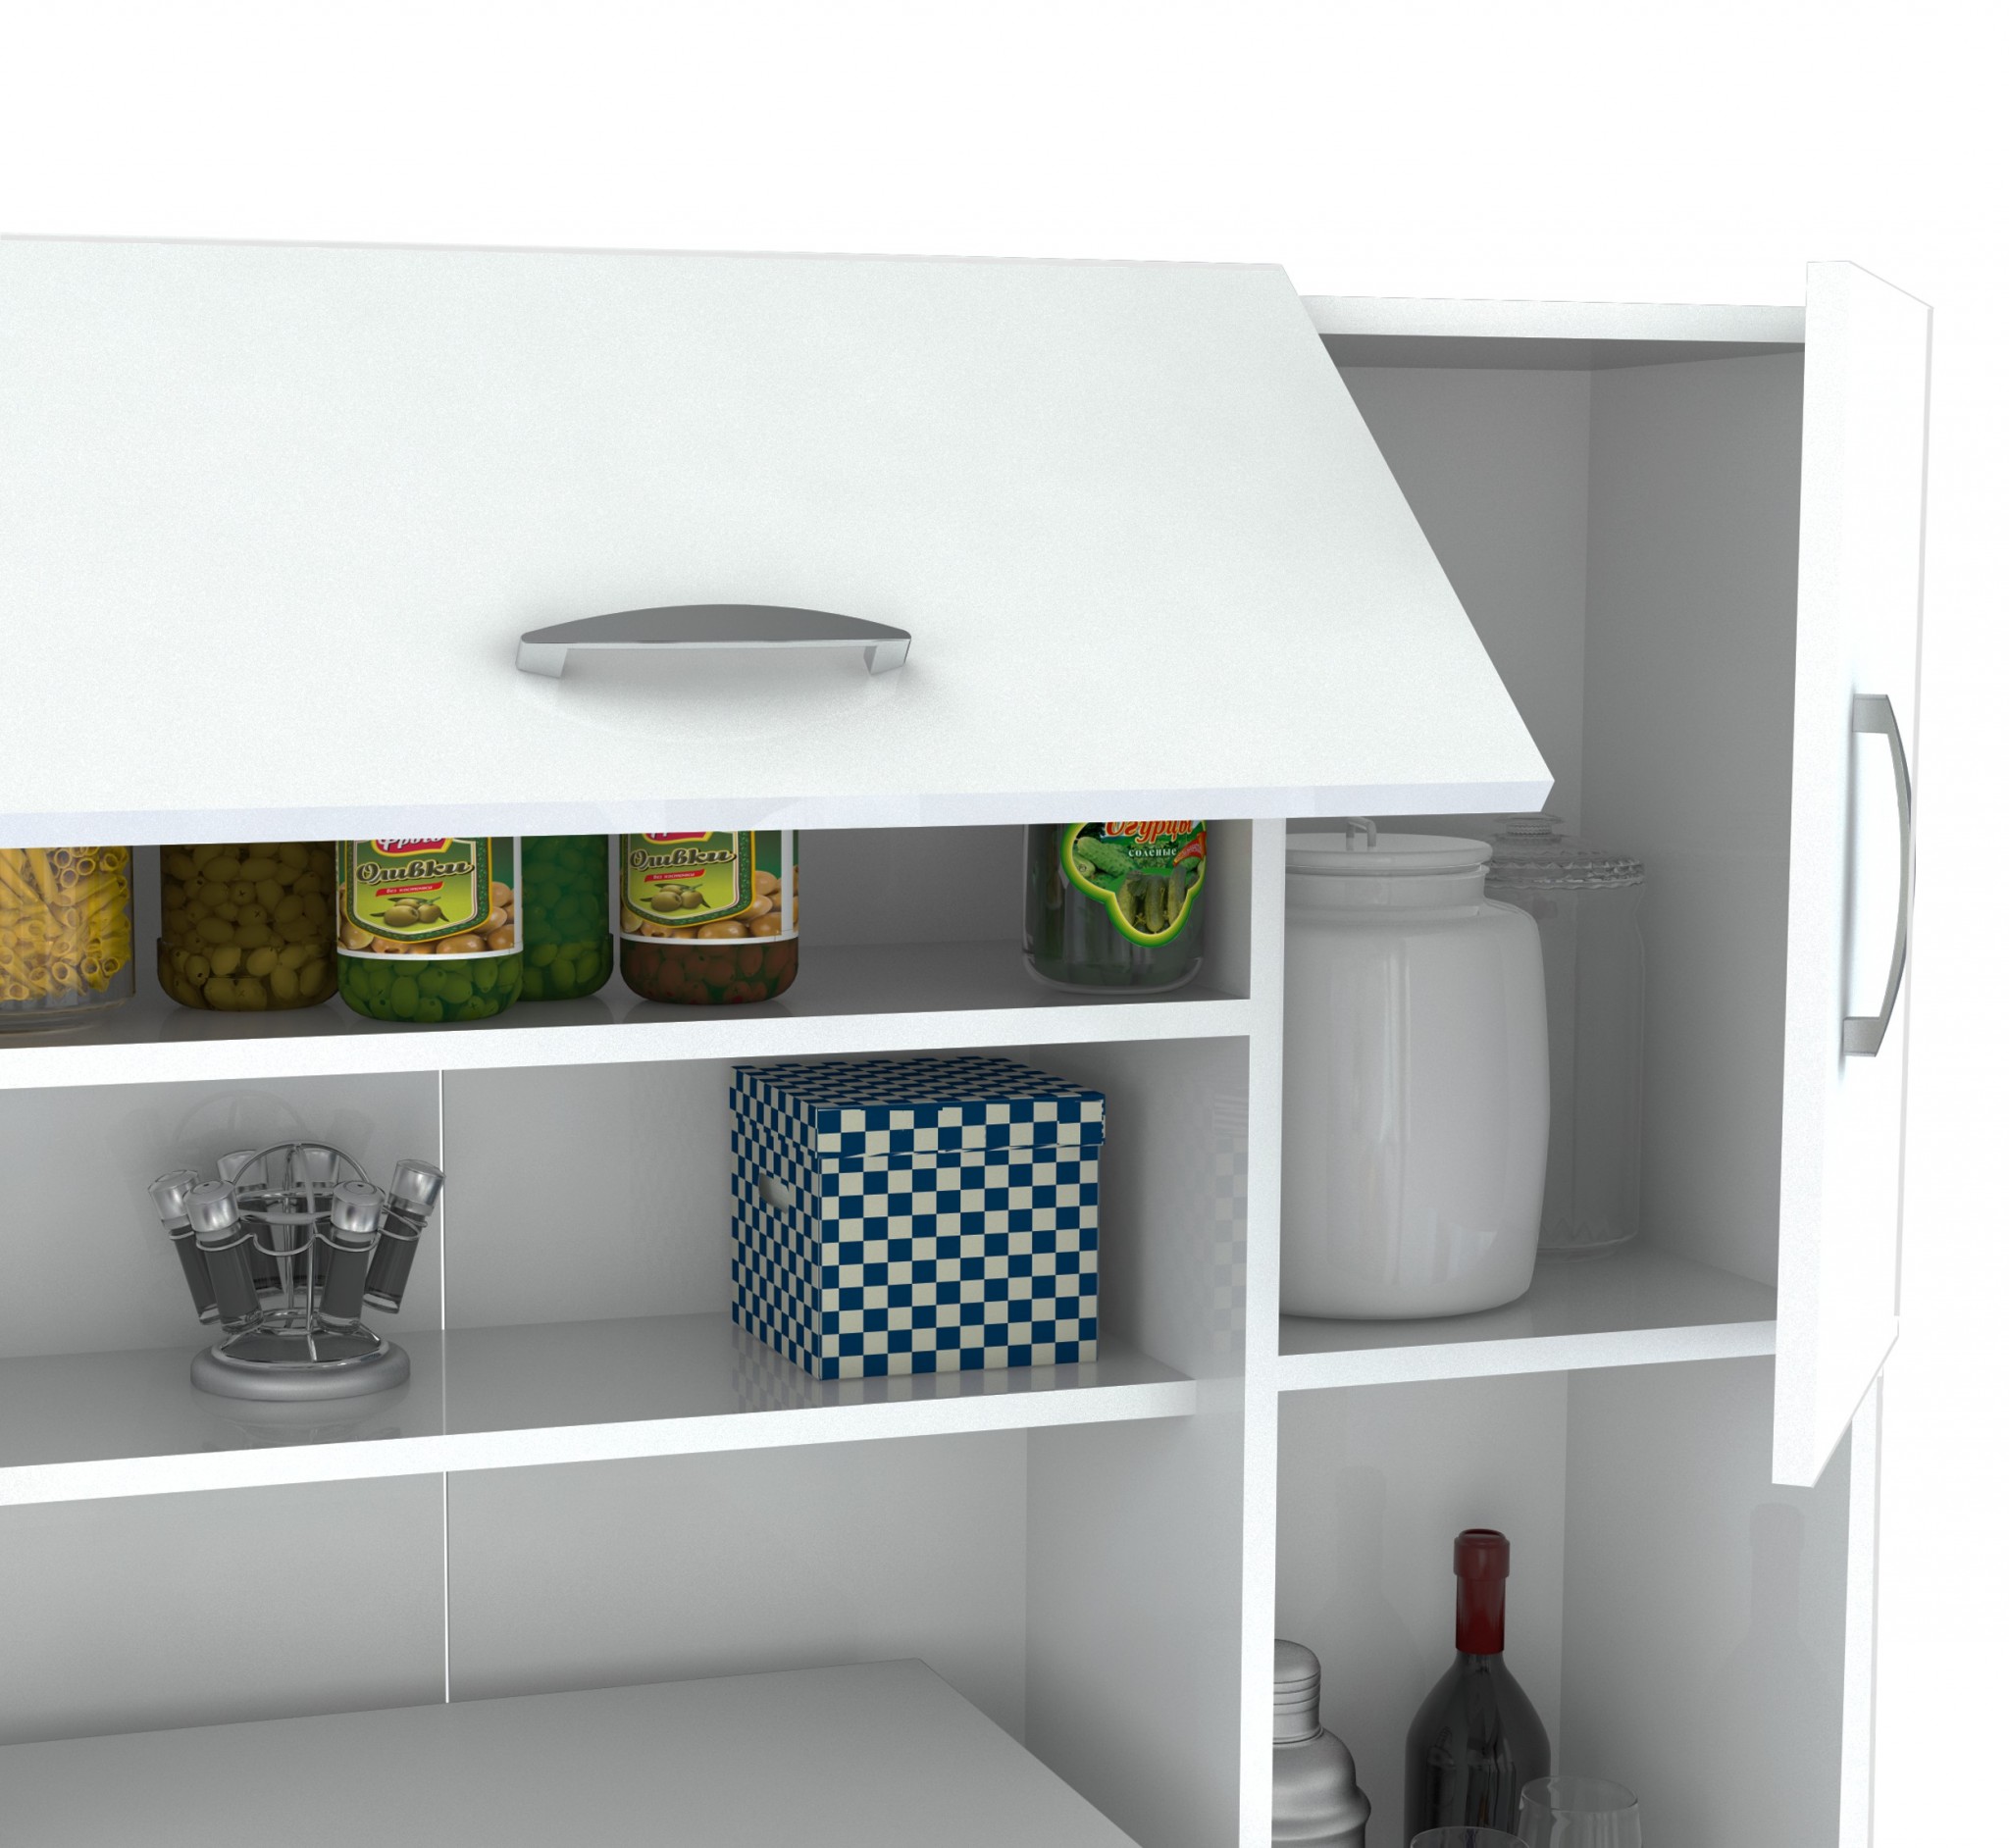 66.1" Contemporary White Melamine and Engineered Wood Kitchen Storage Cabinet